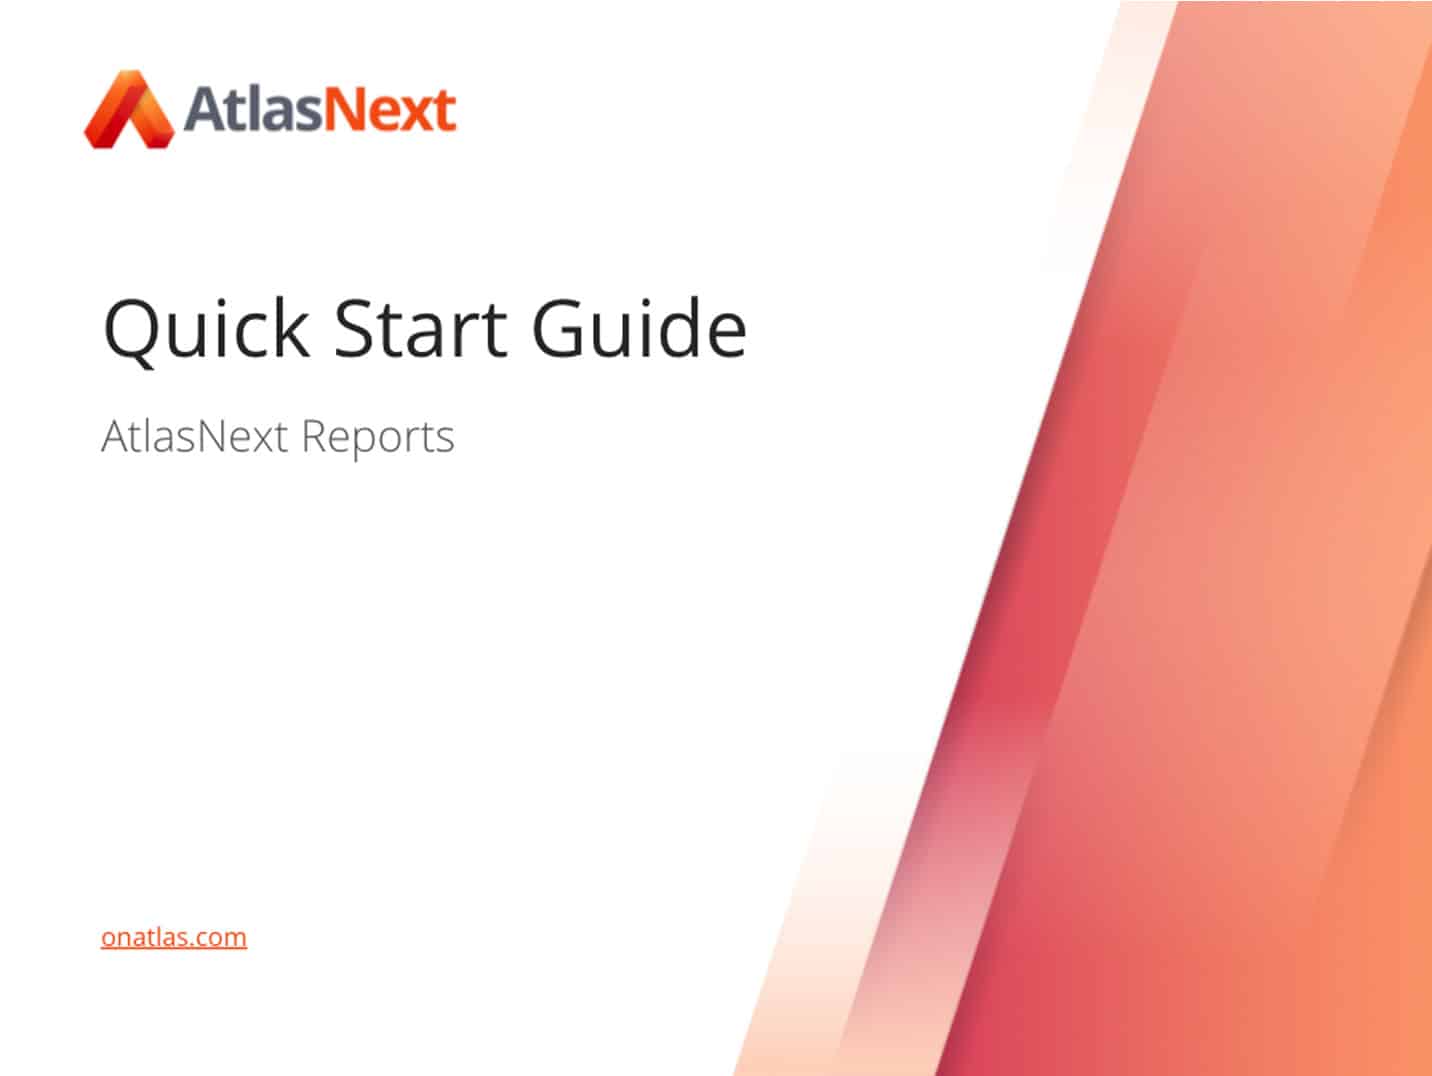 AtlasNext: Quick Start Guide for AtlasNext Reports